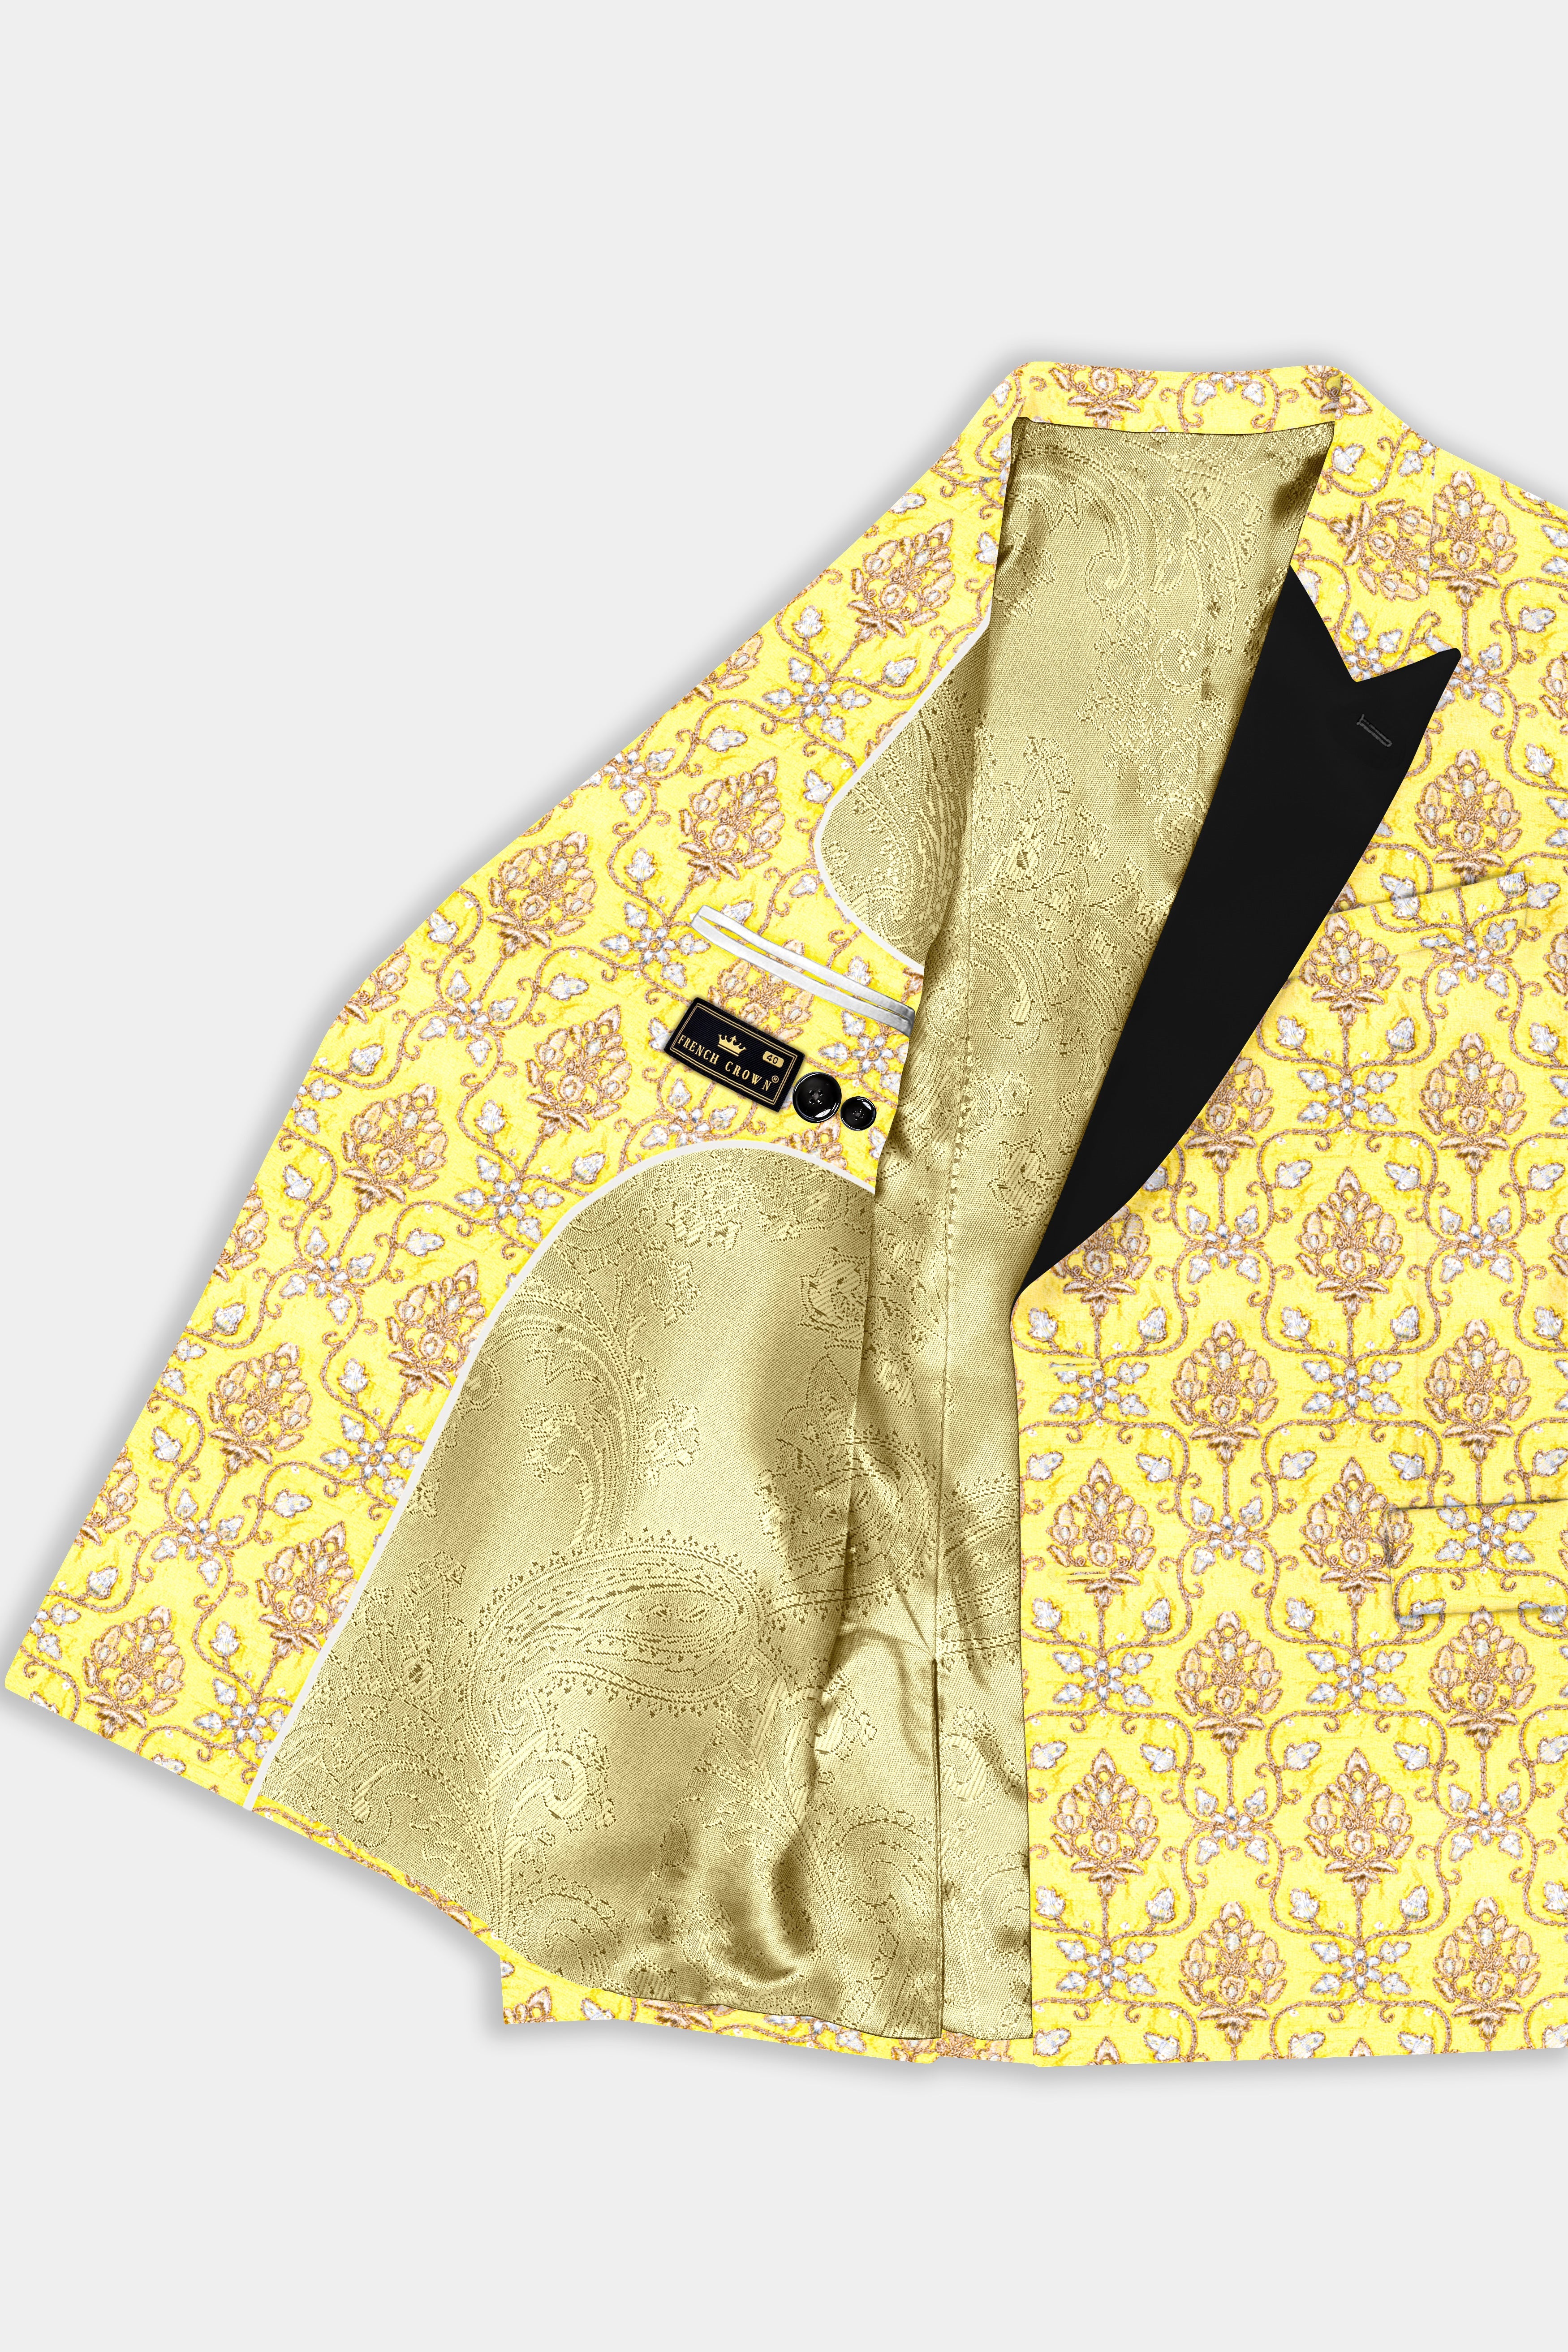 Marigold Yellow And Quicksand Brown Thread Embroidered Peak Collar Tuxedo Blazer